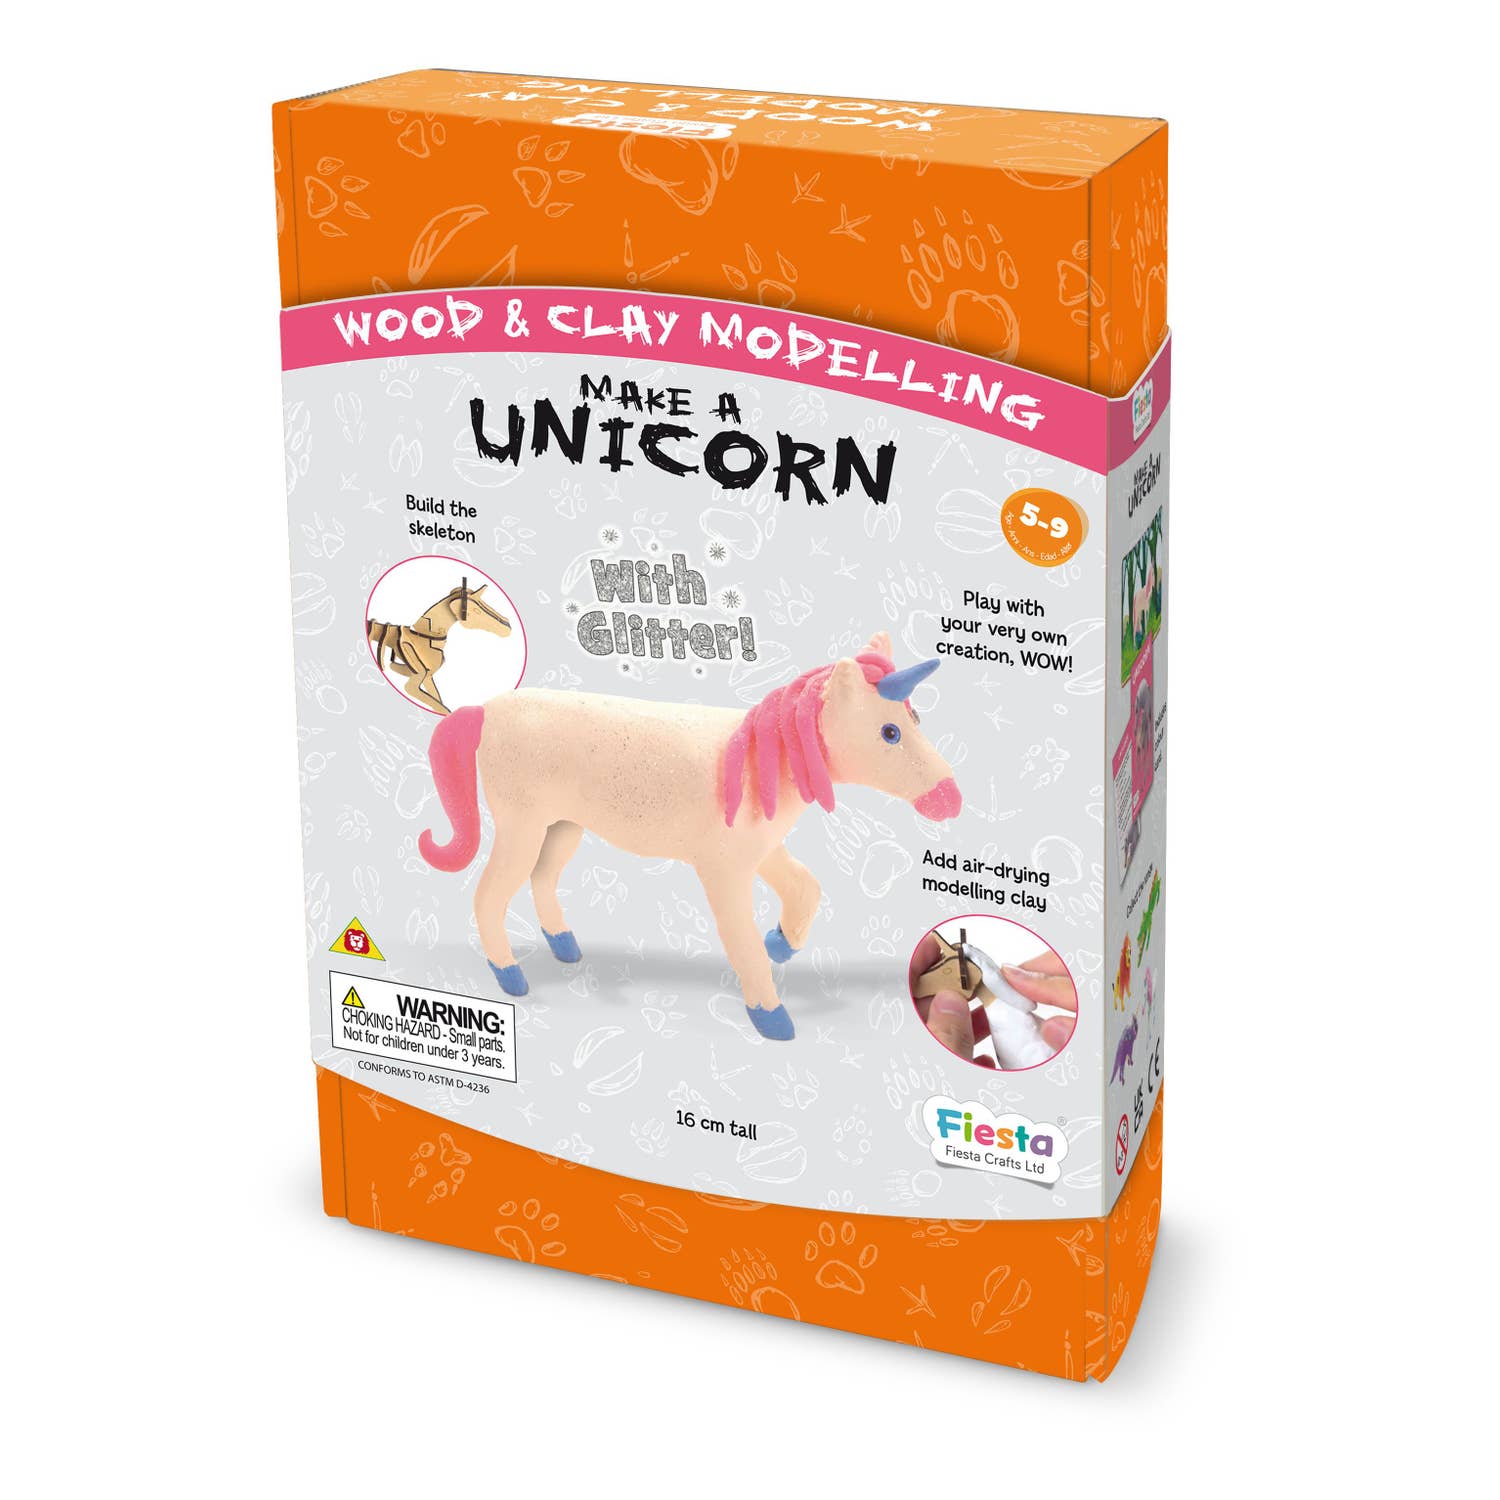 Girls Christmas Gifts: Make-A-Unicorn - Wood and Clay Kit